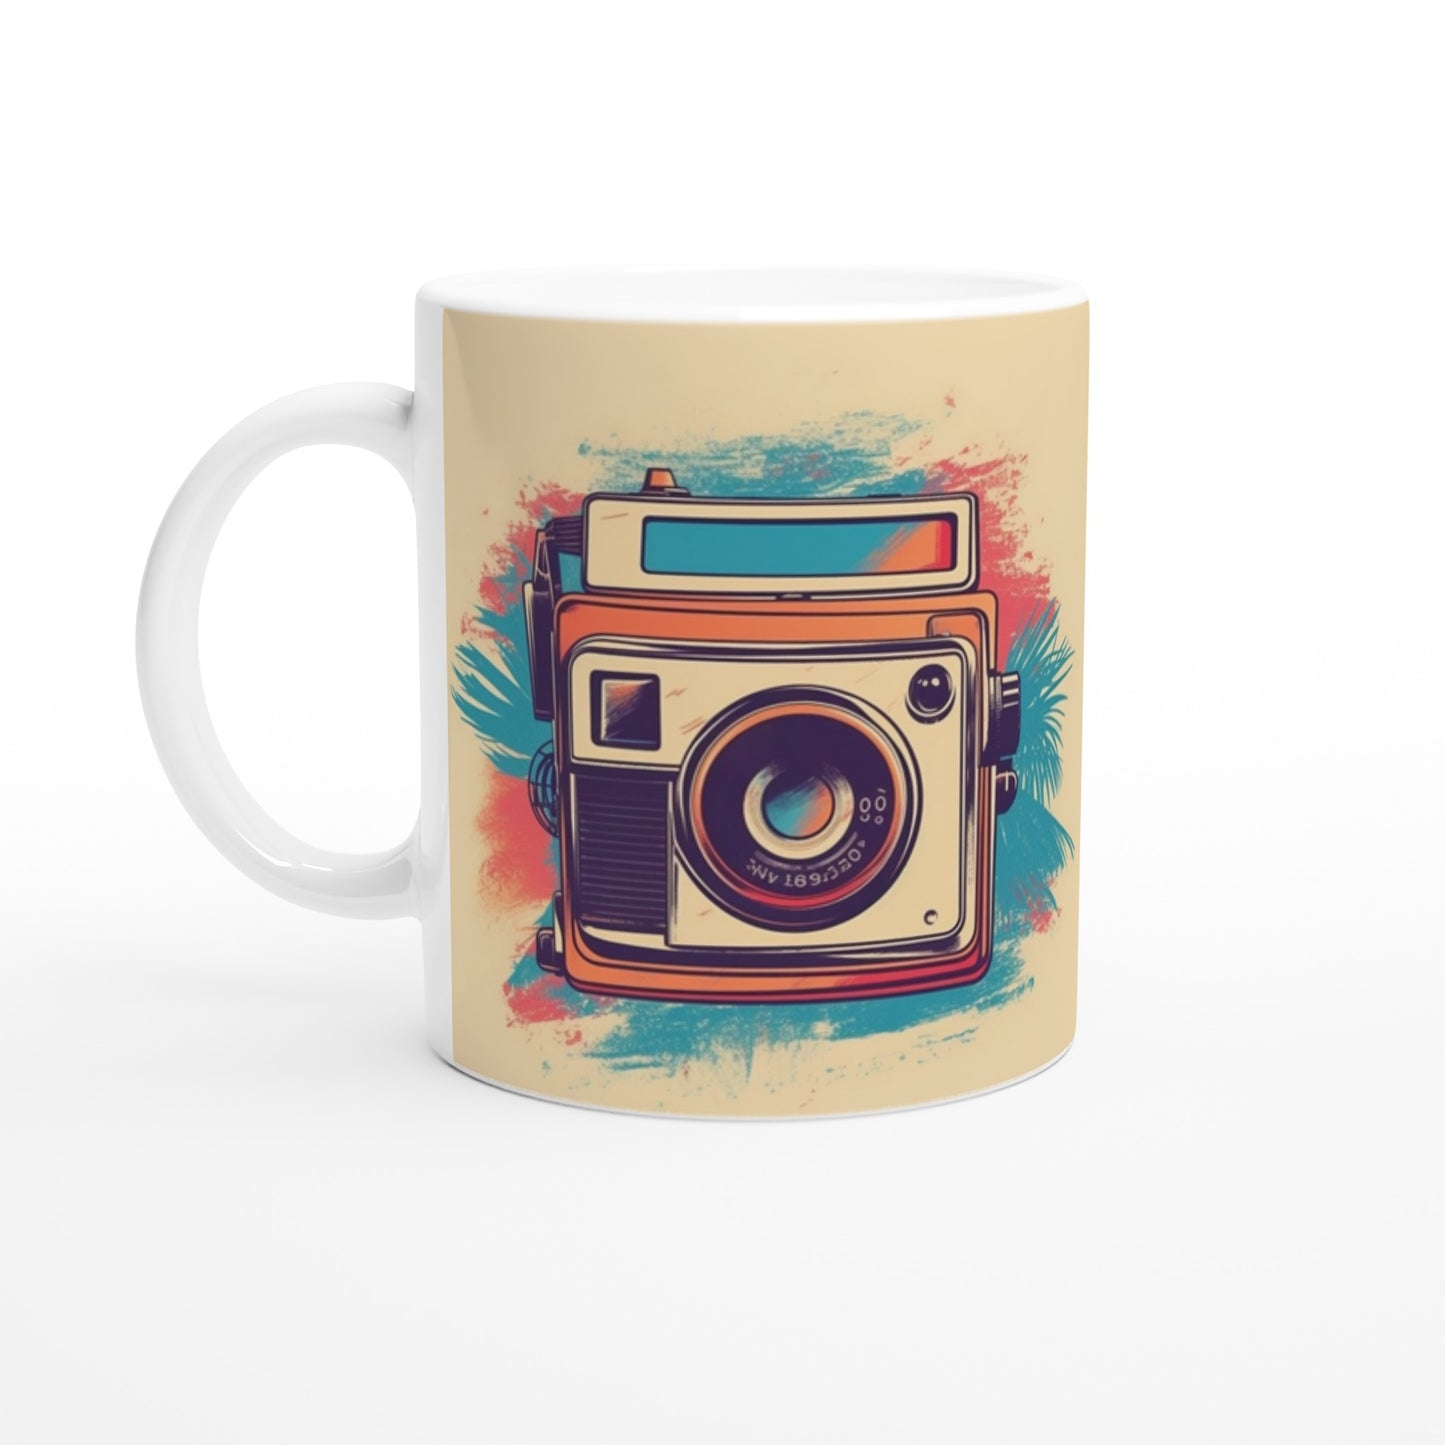 Artwork Mug - Polaroid Camera Vintage Artwork Number 1 - White Mug Ceramic 330ml 